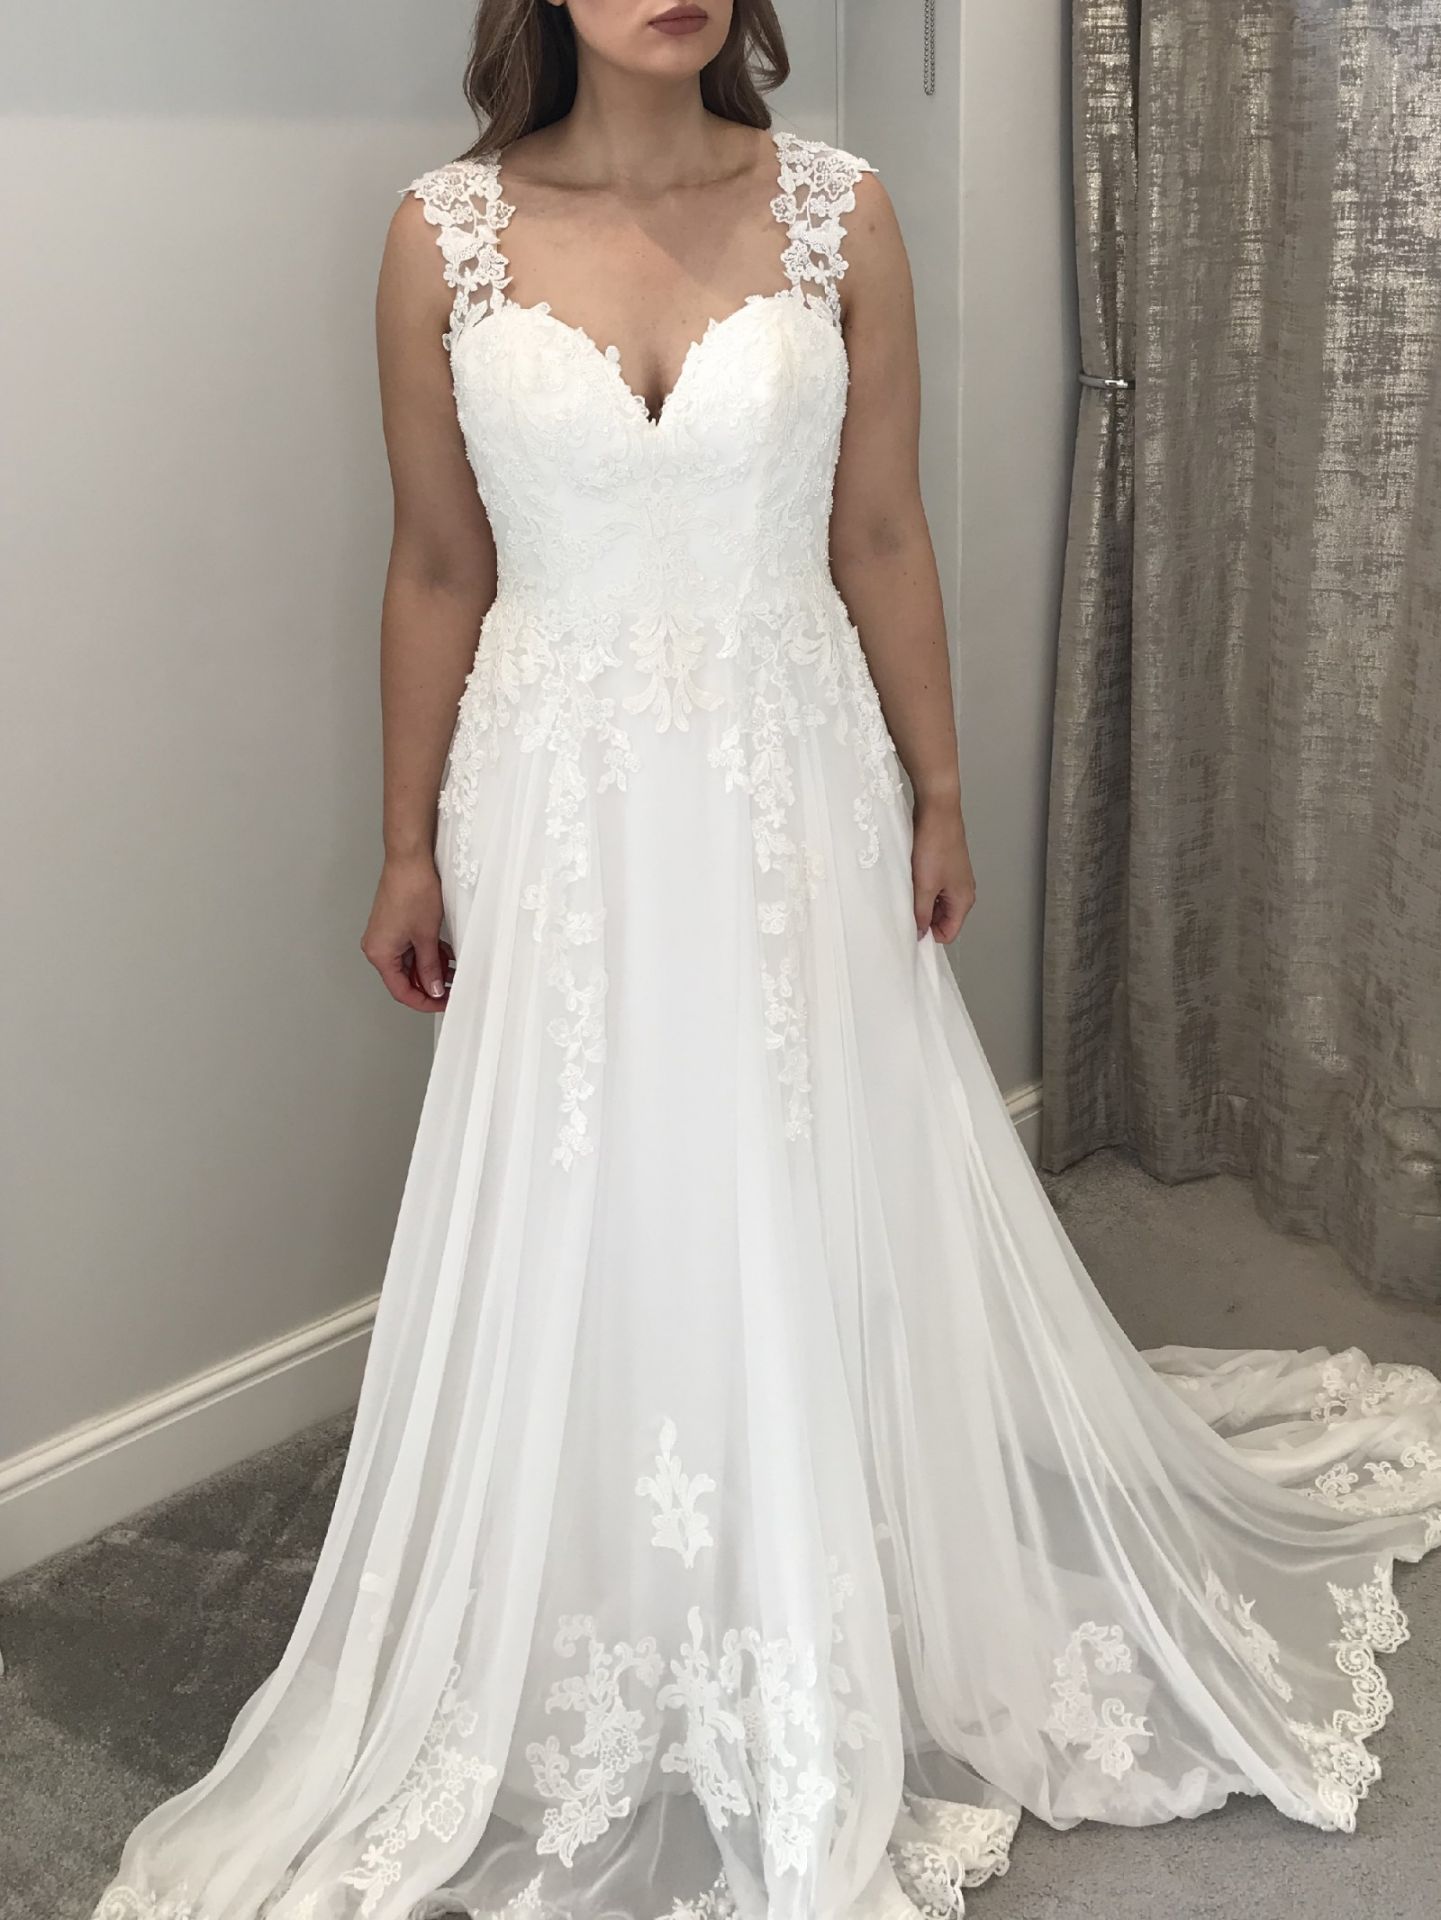 1 x Justin Alexander Designer Beaded Venice Lace A-line Wedding Bridal Dress - Size 16 - RRP £1,545 - Image 5 of 6